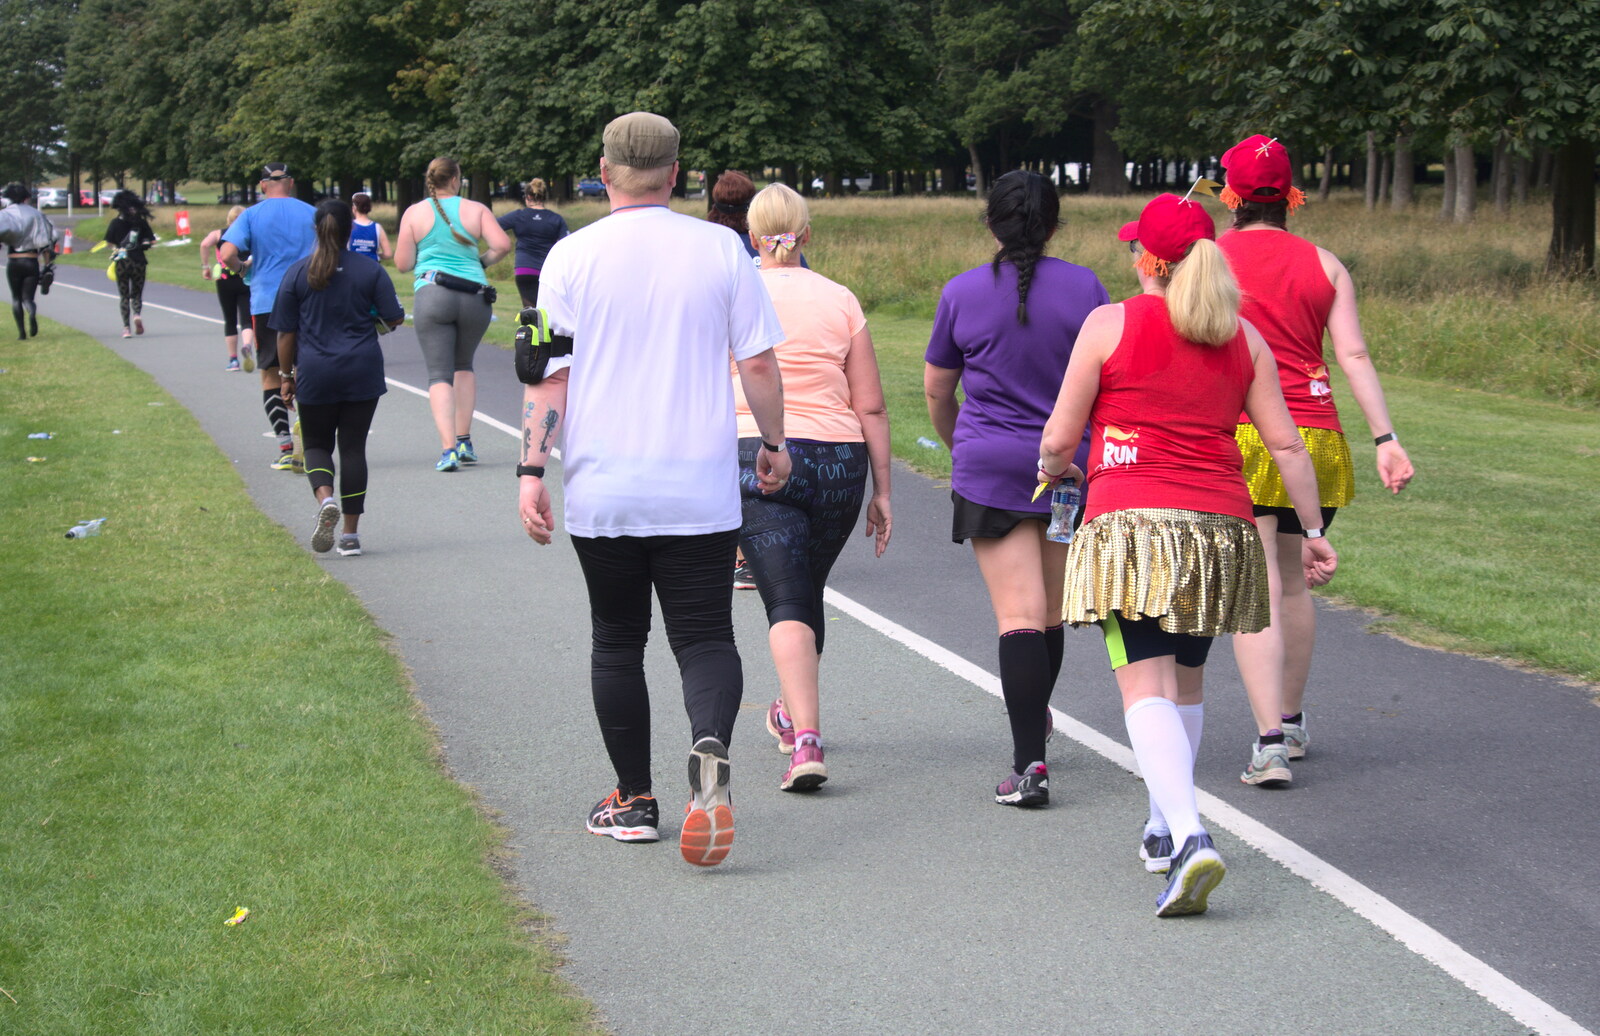 Runners walk to the start from Isobel's Rock'n'Roll Half Marathon, Dublin, Ireland - 13th August 2017